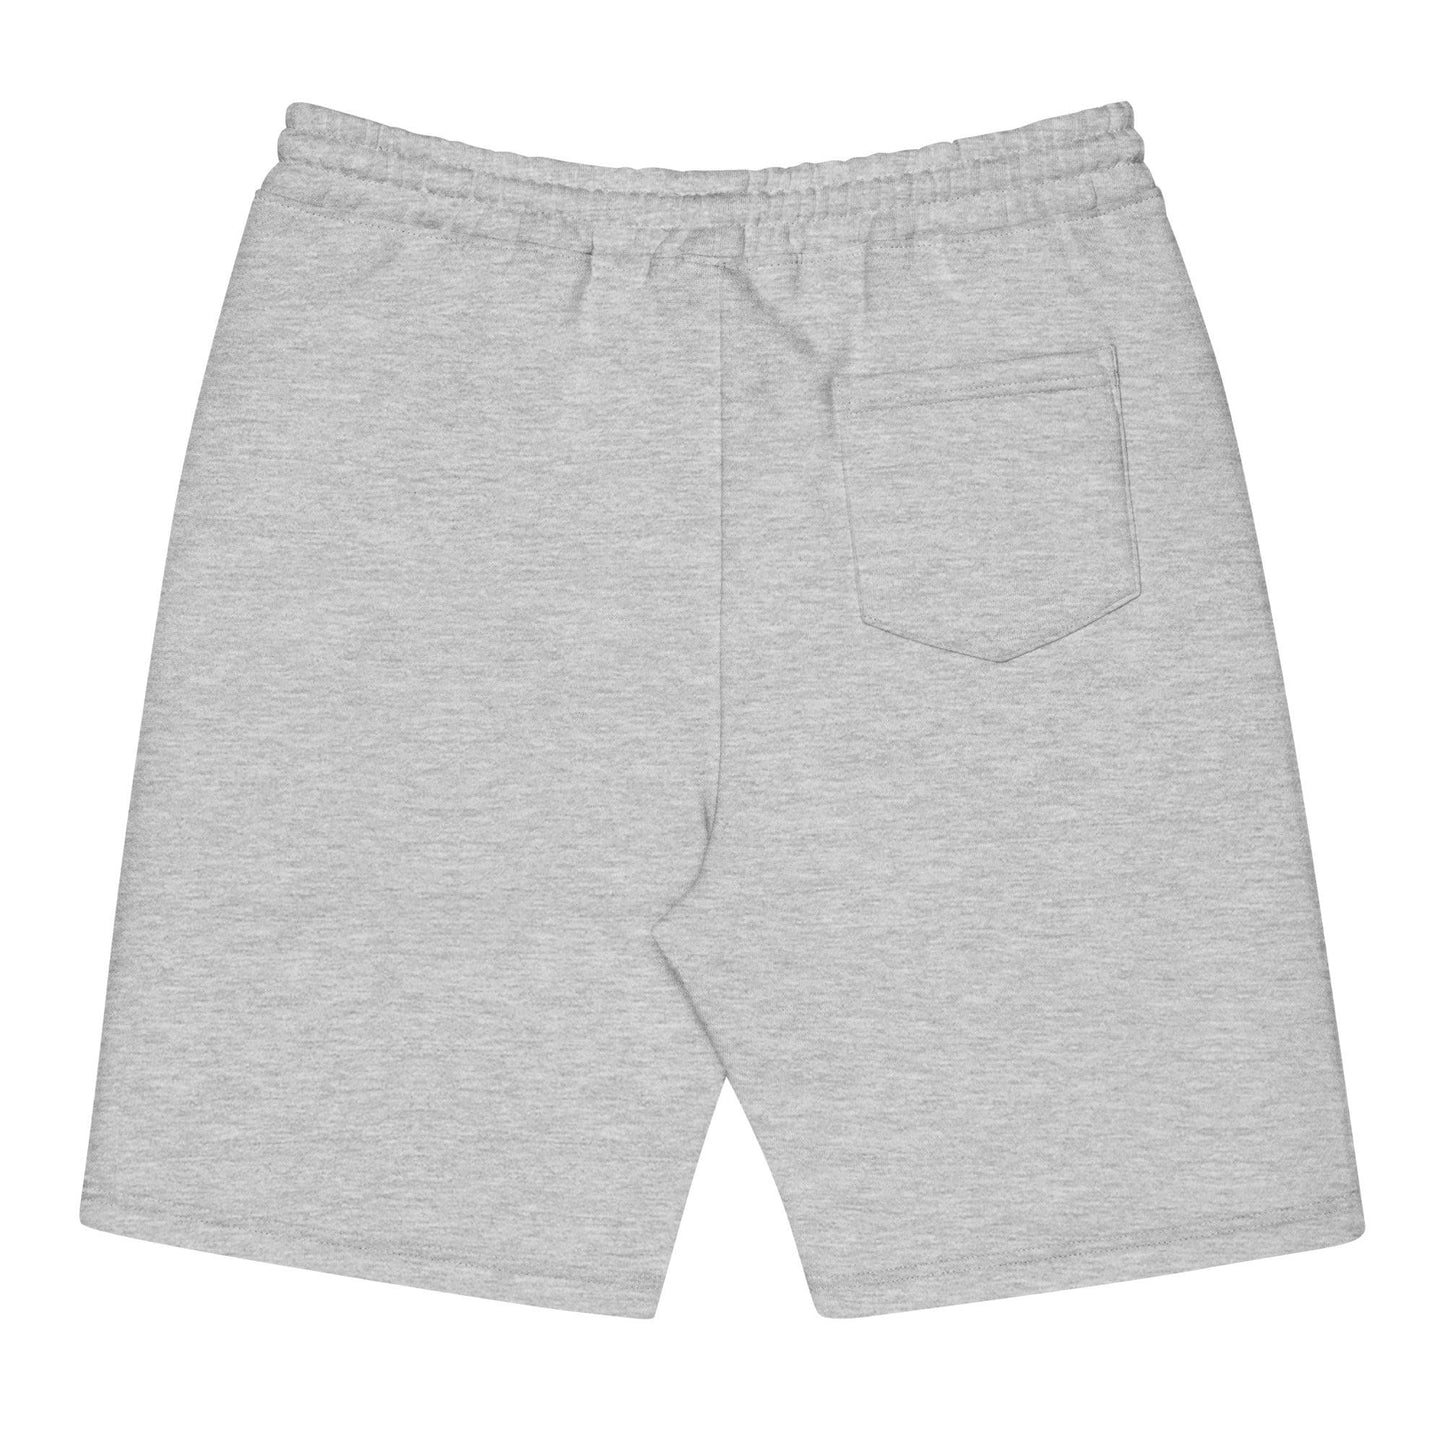 Men's fleece shorts